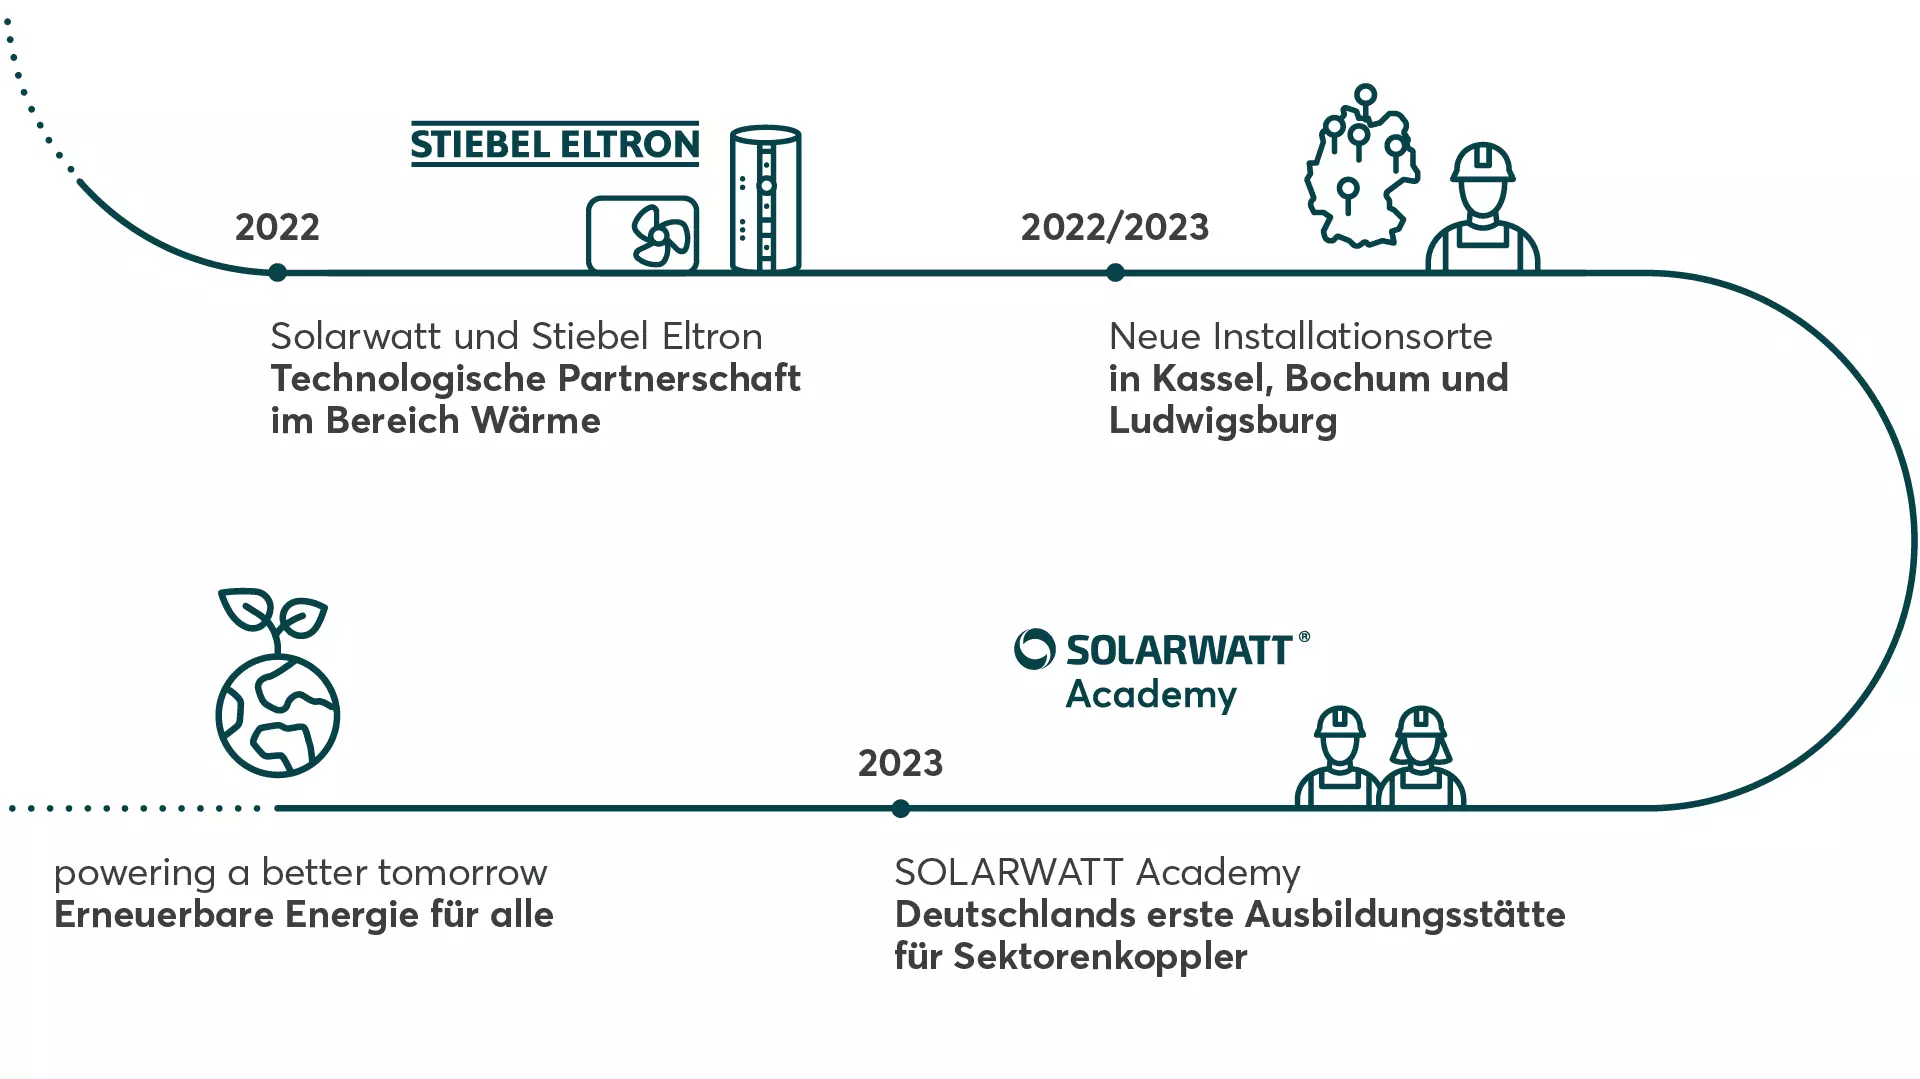 Firmengeschichte Solarwatt 2022 bis 2023